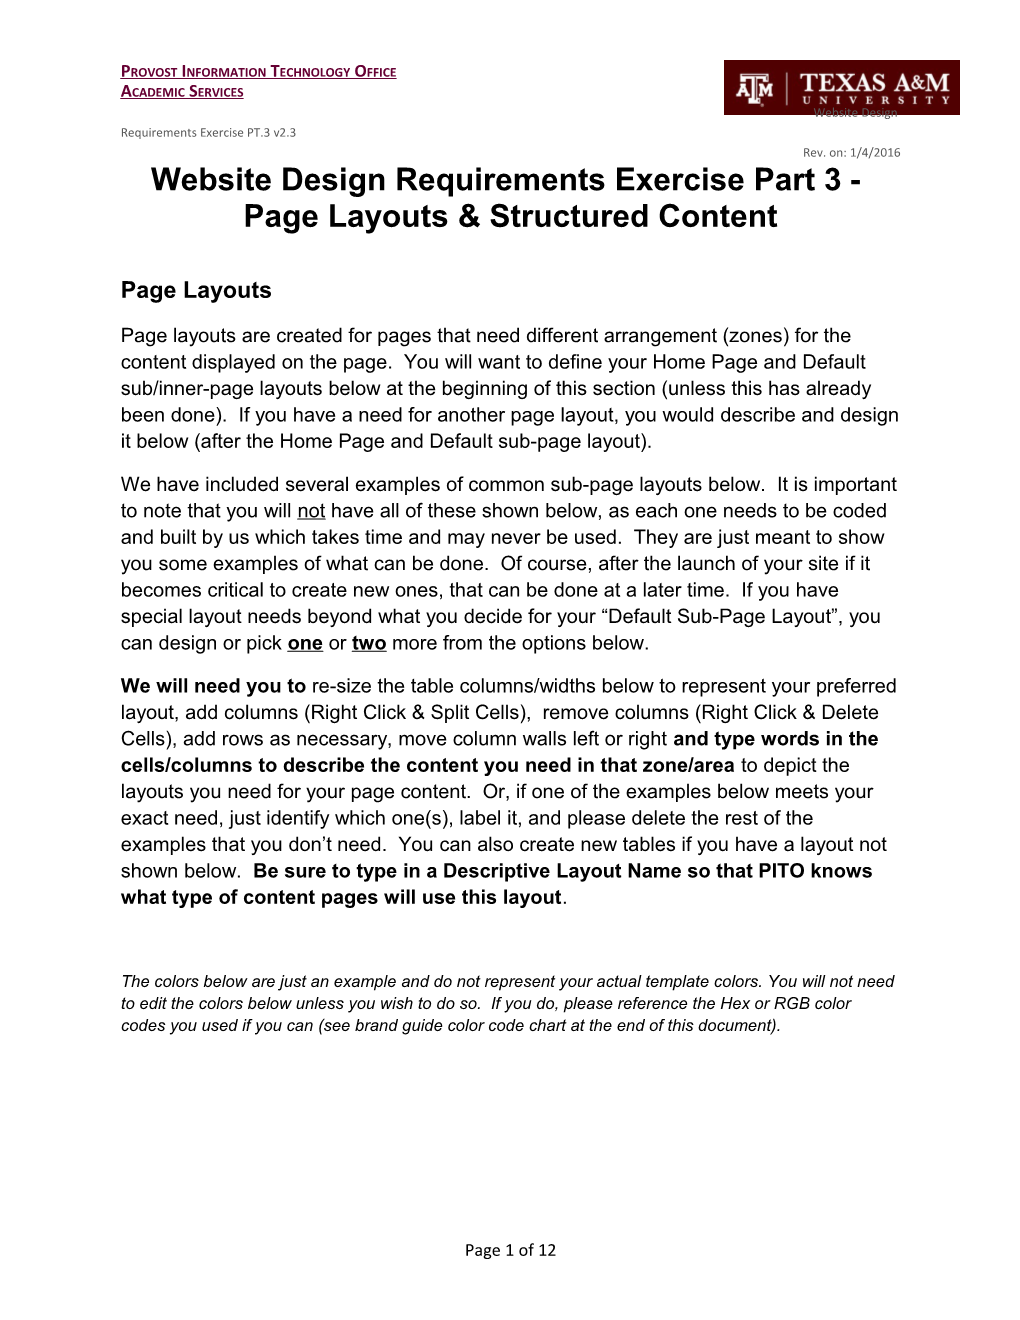 Website Design Requirements Exercise Part 3